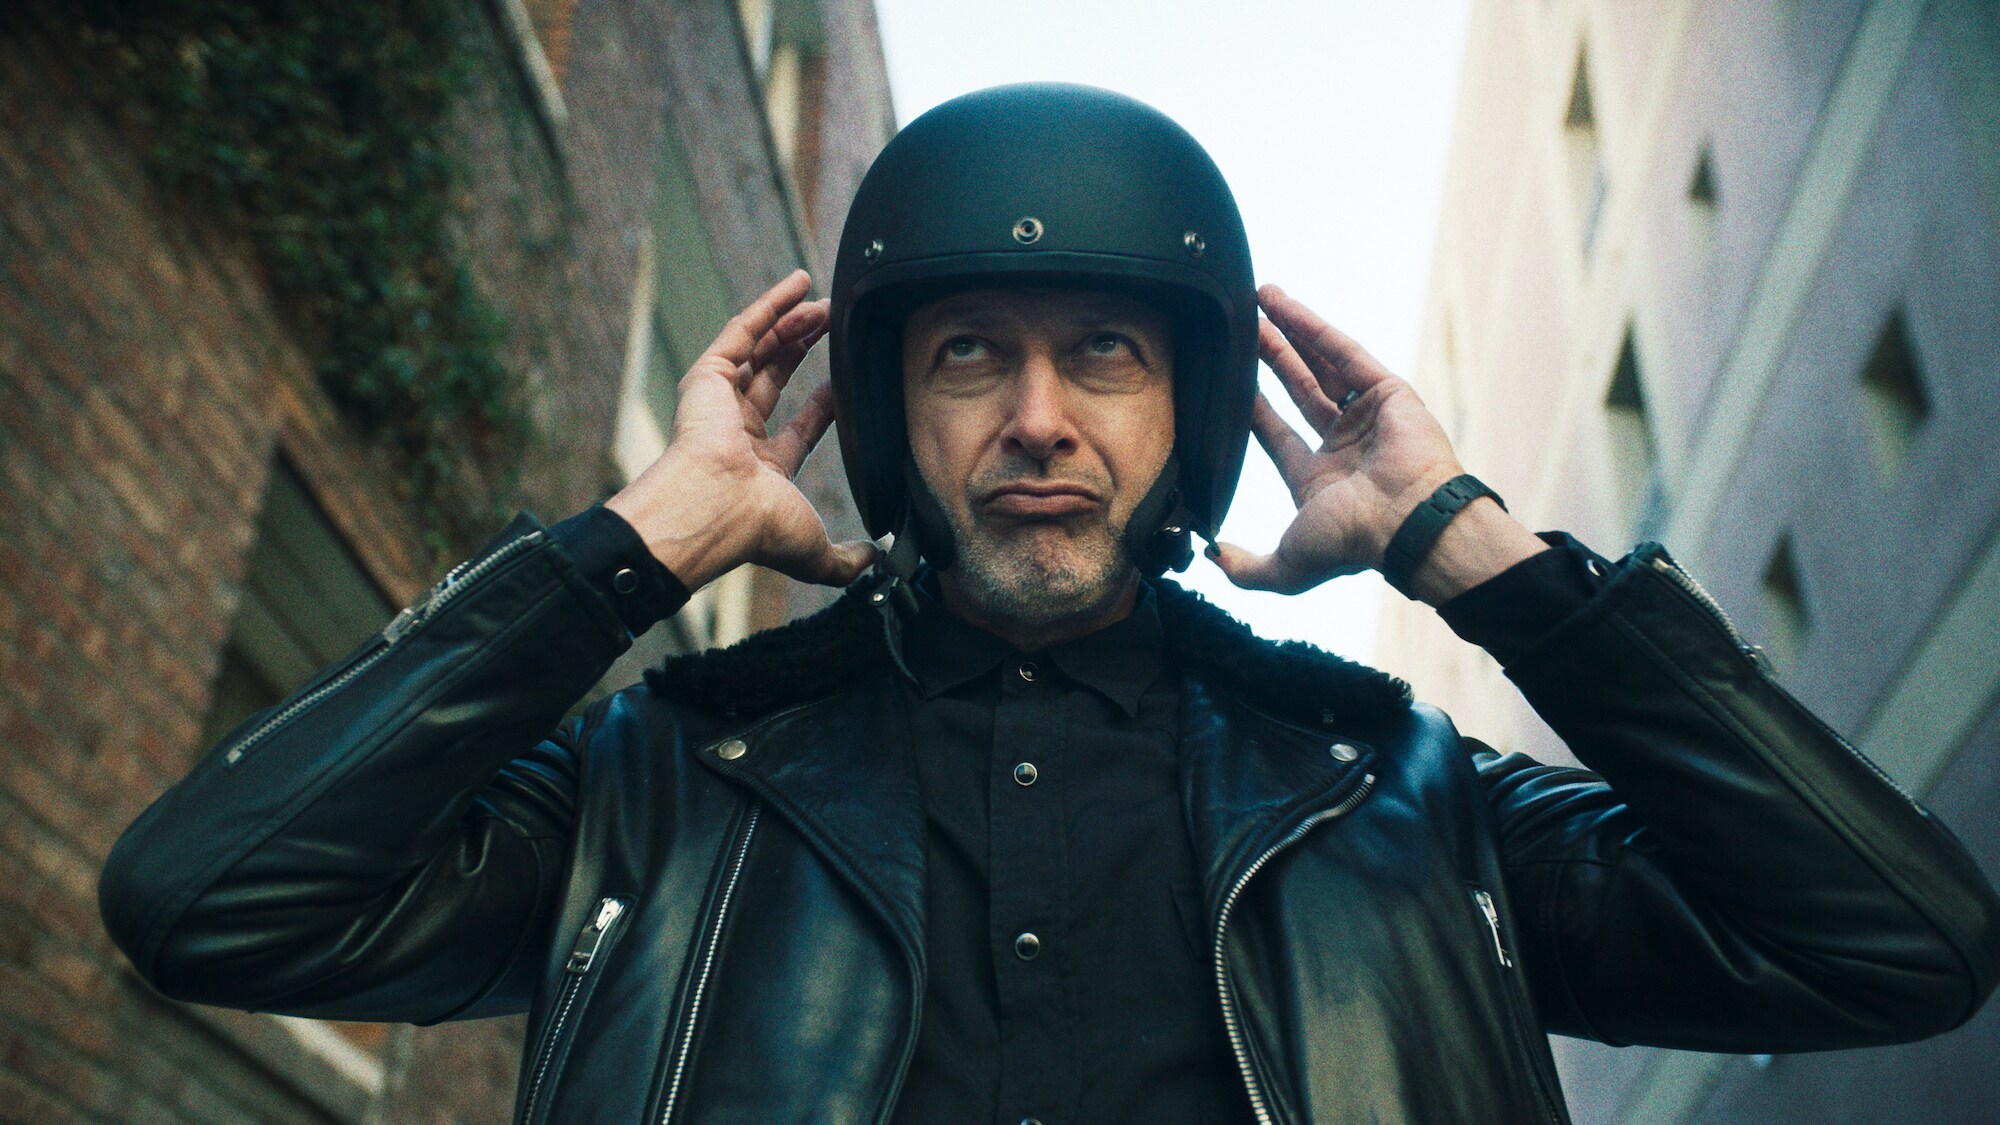 Los Angeles, CA - Jeff Goldblum wearing a motorcycle helmet. (Credit: National Geographic)